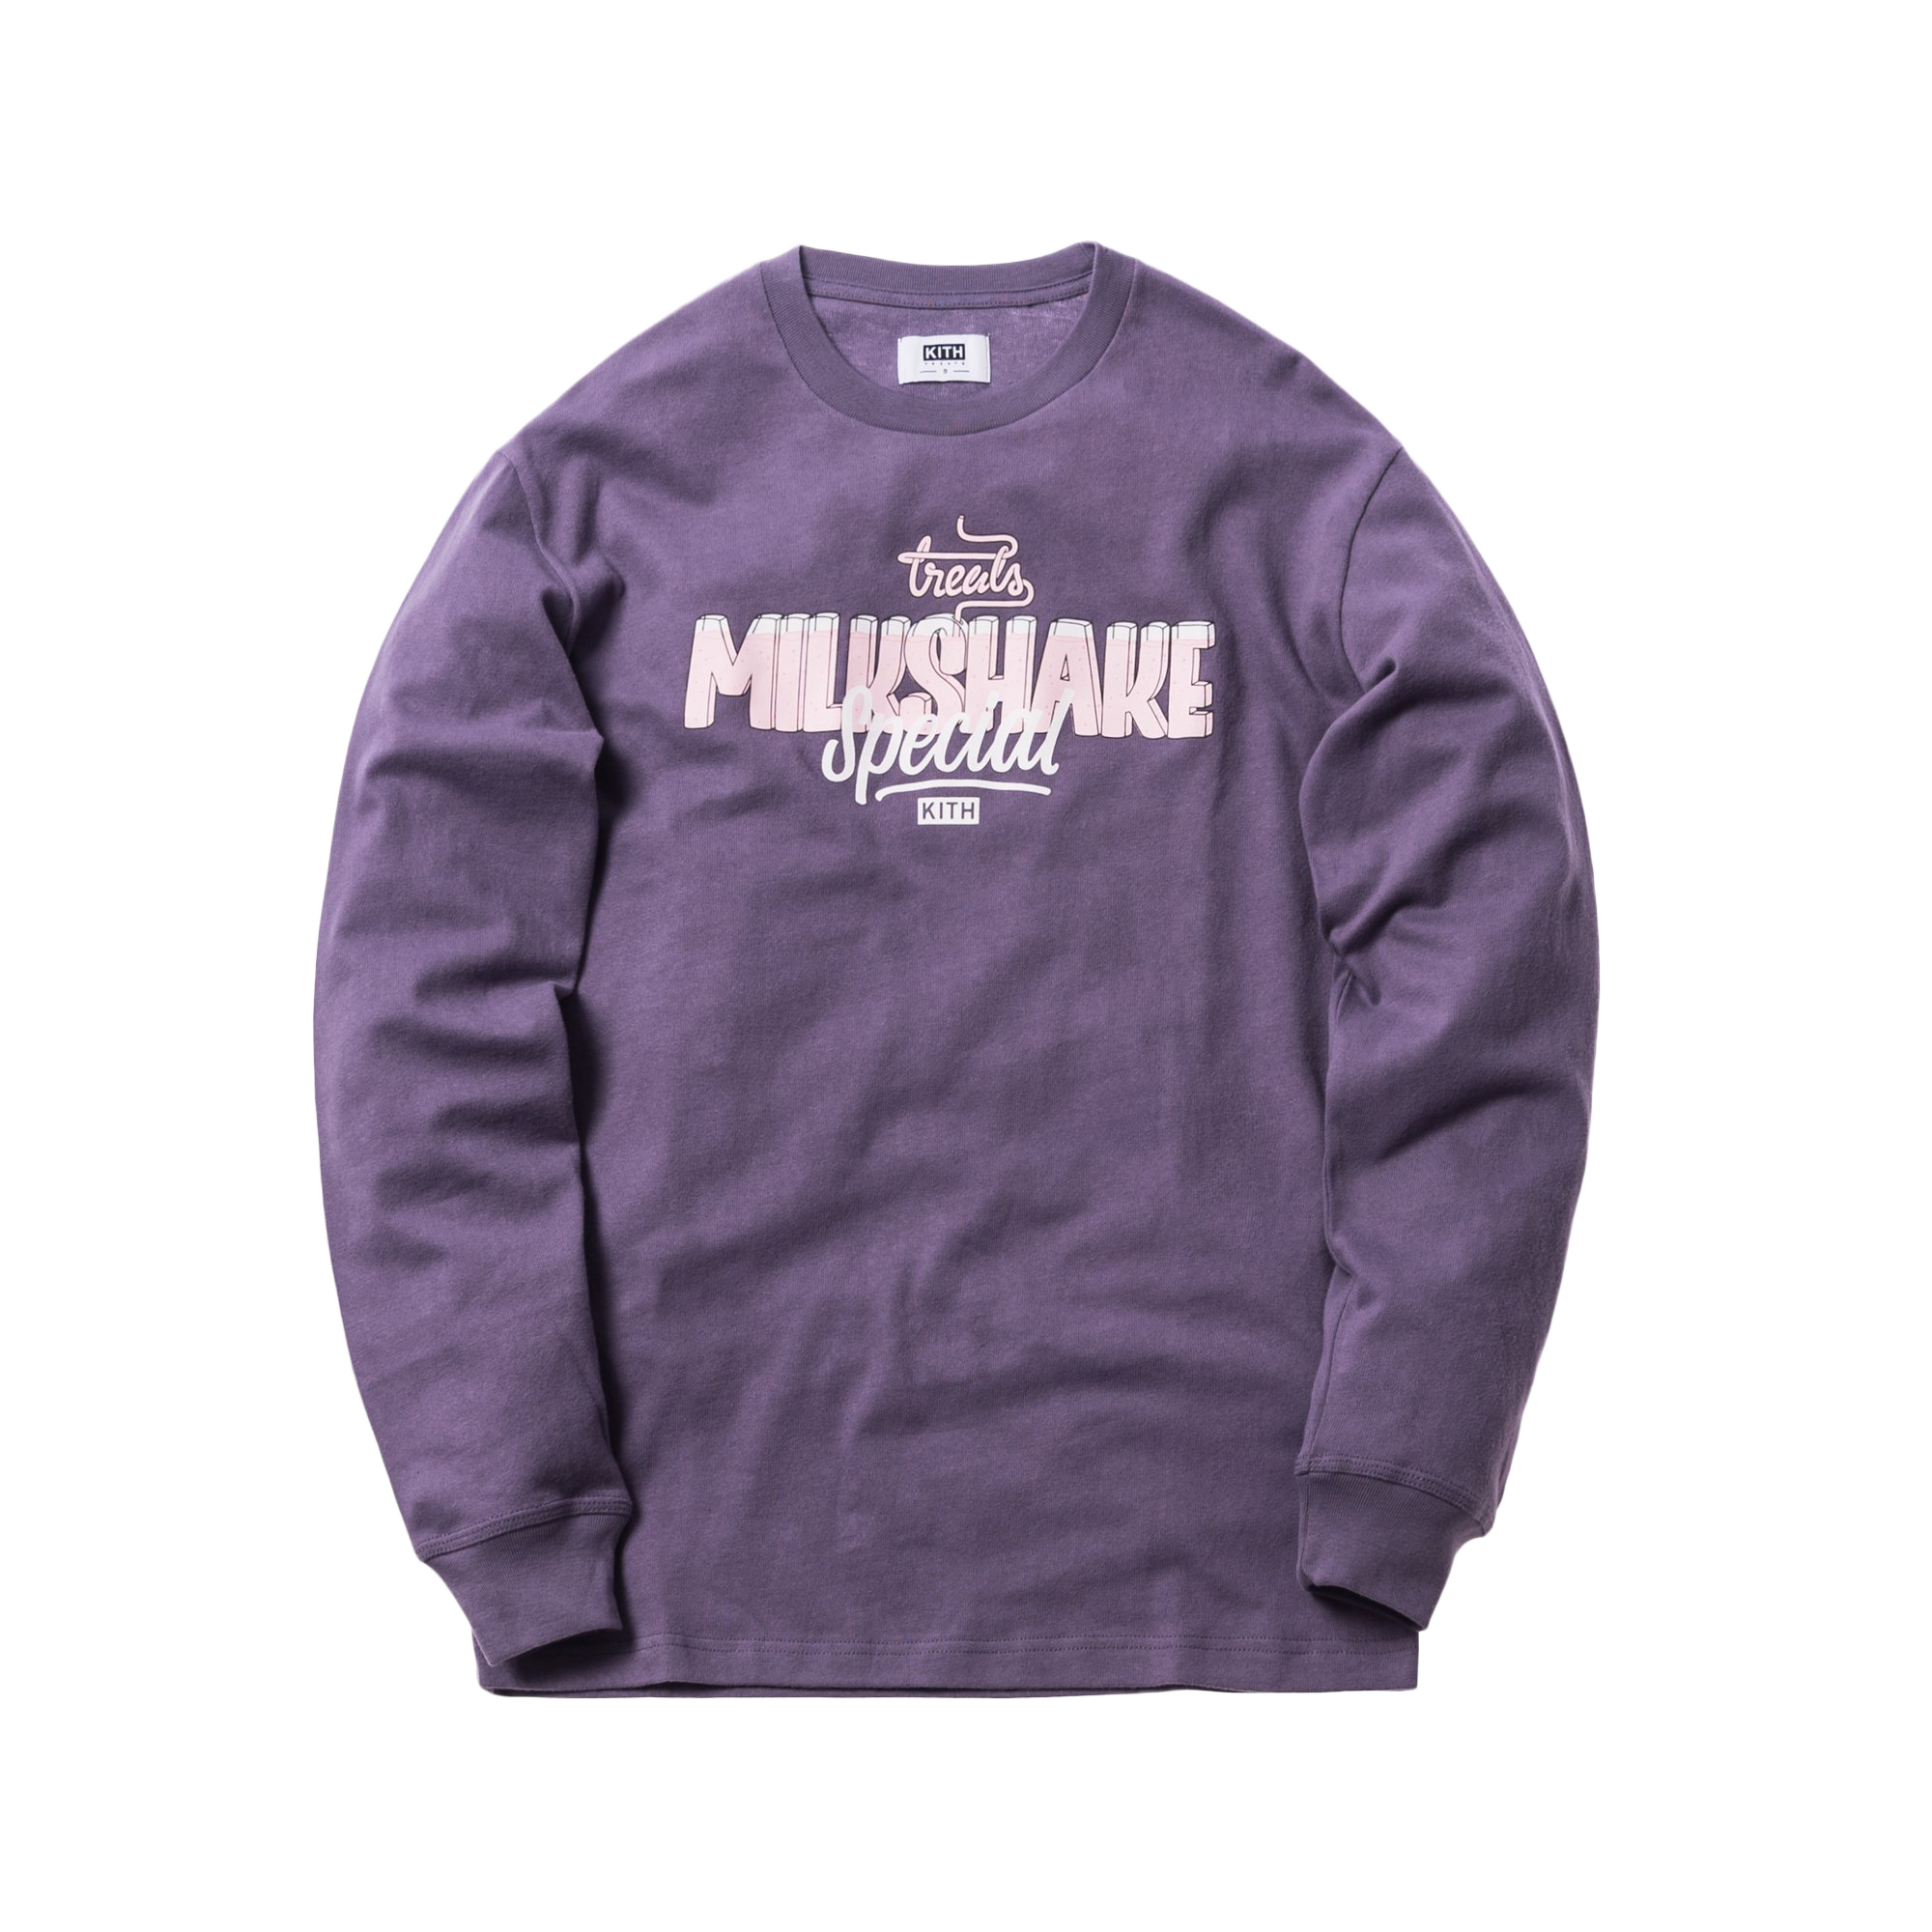 Kith Treats Milkshake Special LS Tee Purple Men's - SS18 - US